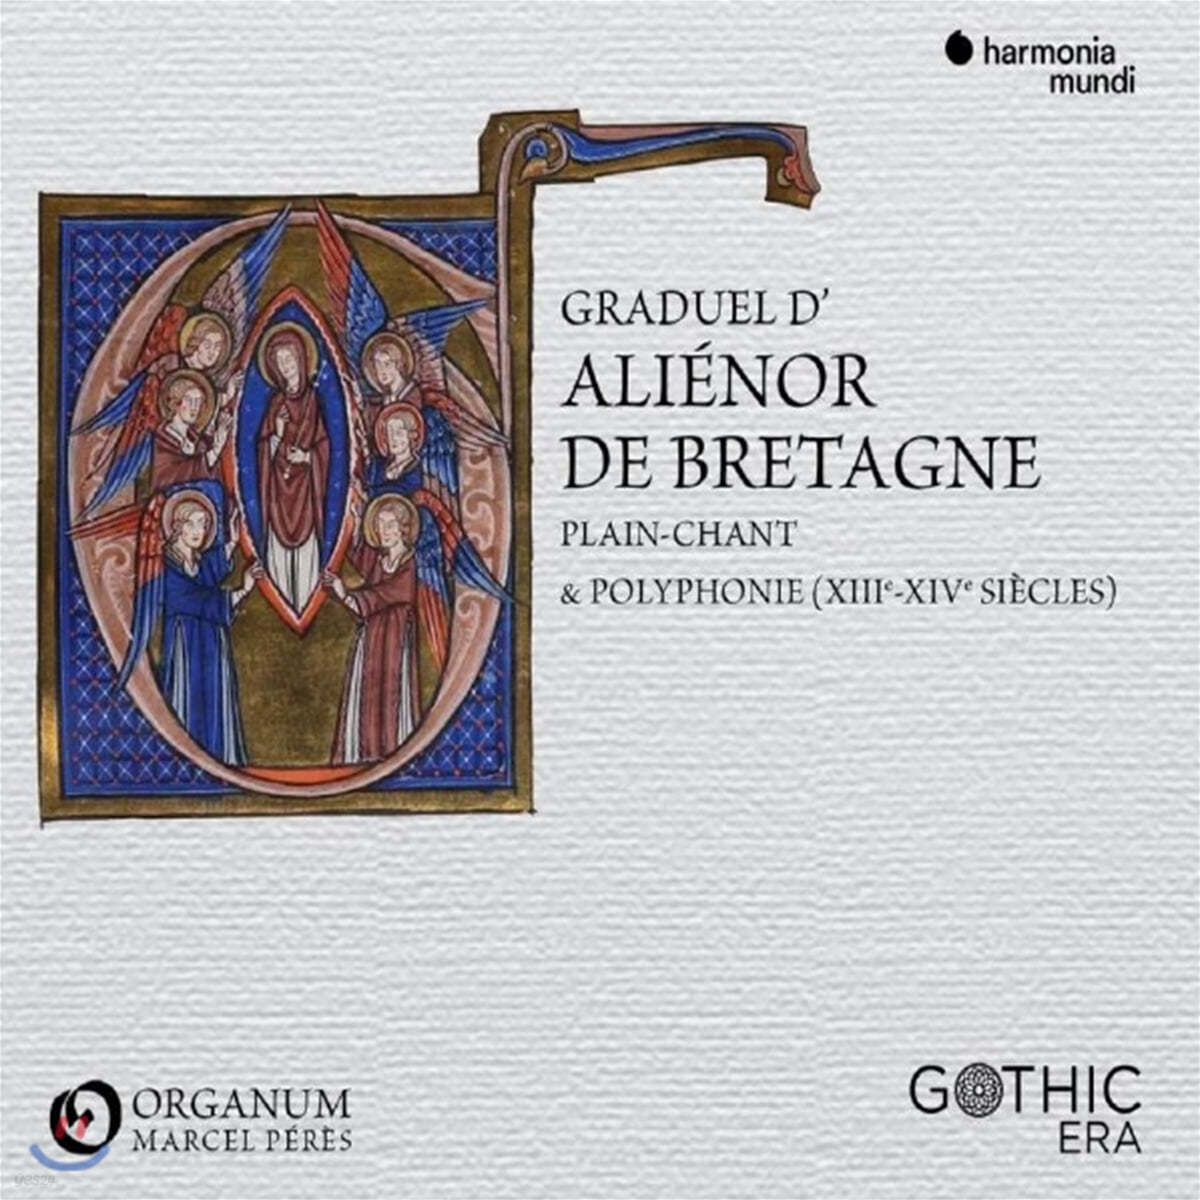 Marcel Peres 브르타뉘 지방의 미사 성가 - 13, 14세기의 명백한 찬트와 다성음악 (Graduel d'Alienor de Bretagne)